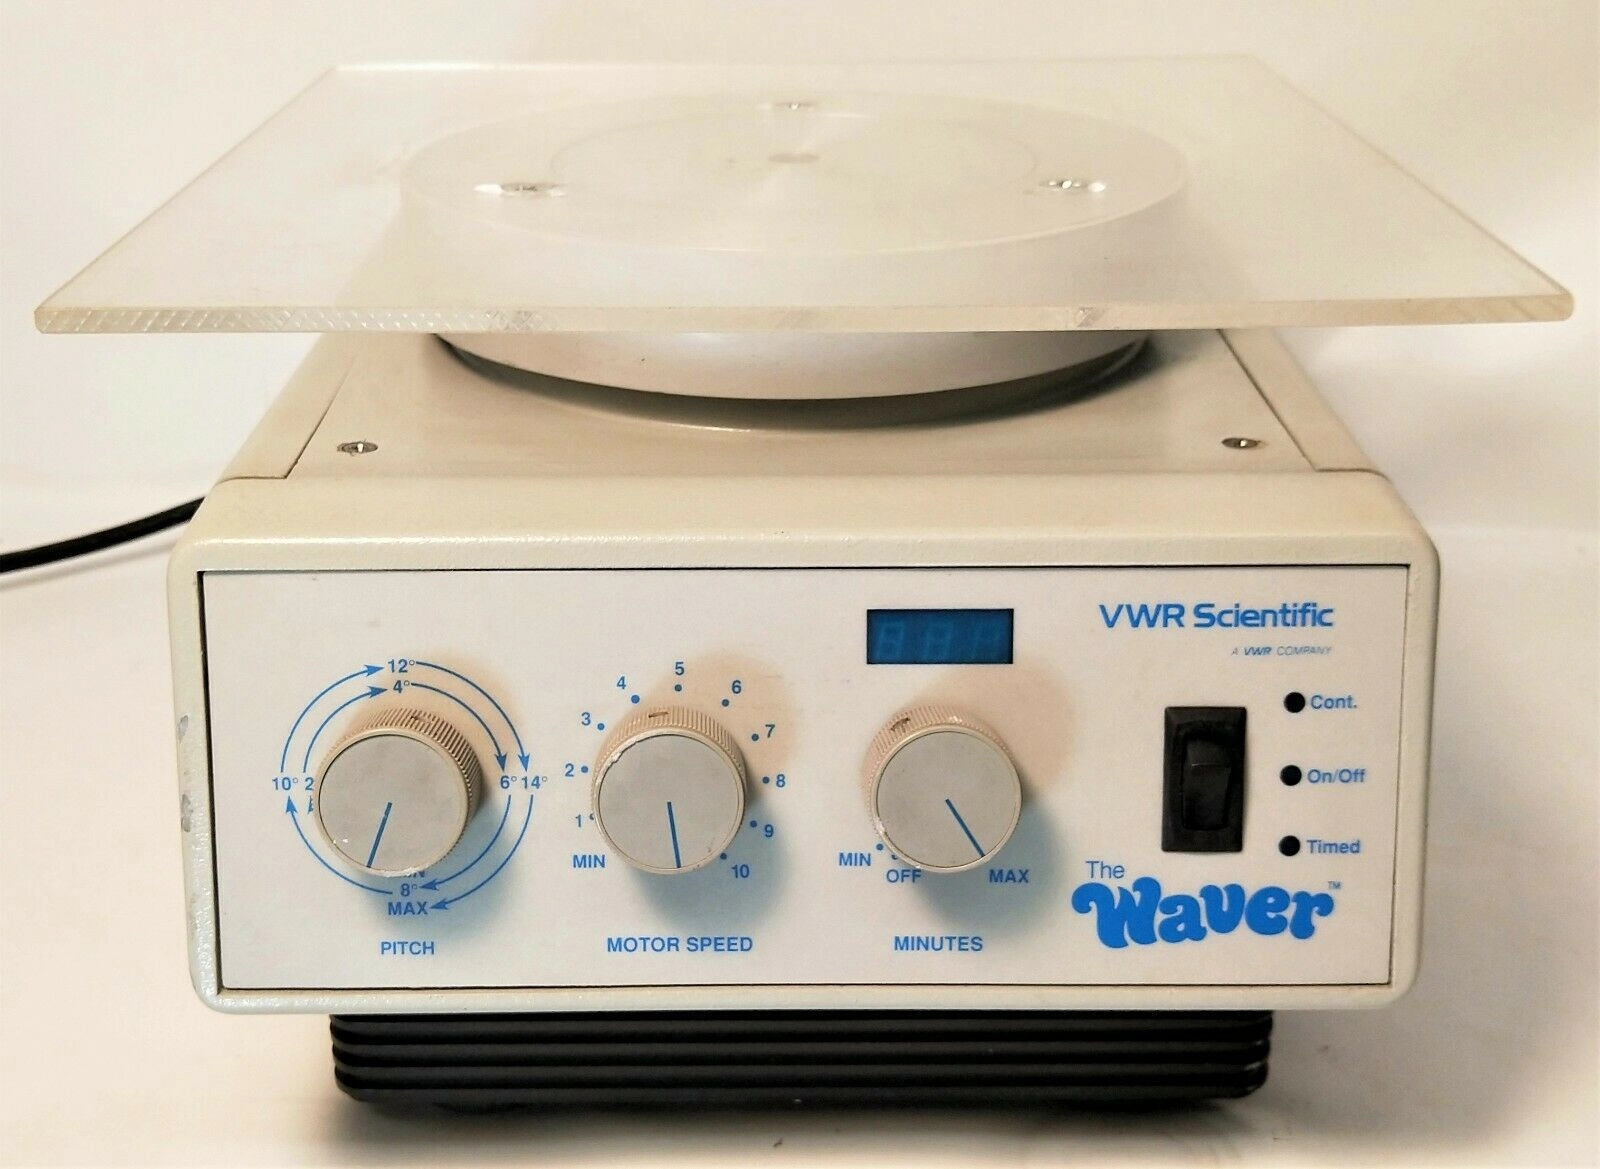 VWR "The Waver" 57018-850 Orbital Shaker